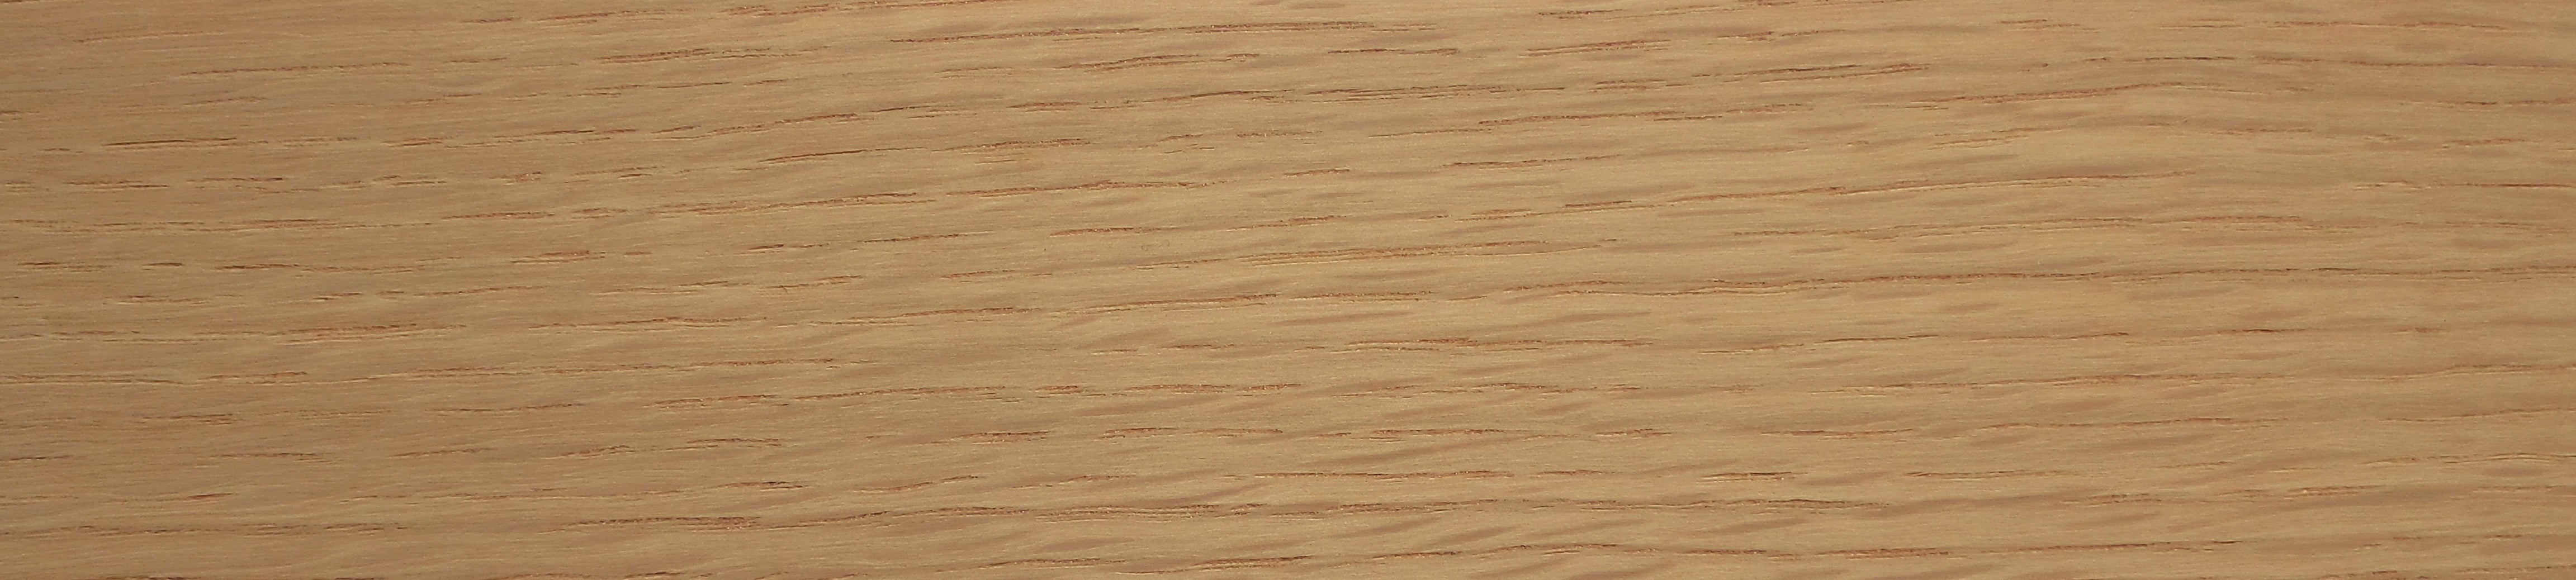 Oak UNGLUED Edging 30mm x 0.5mm - 50 or 100 metre rolls